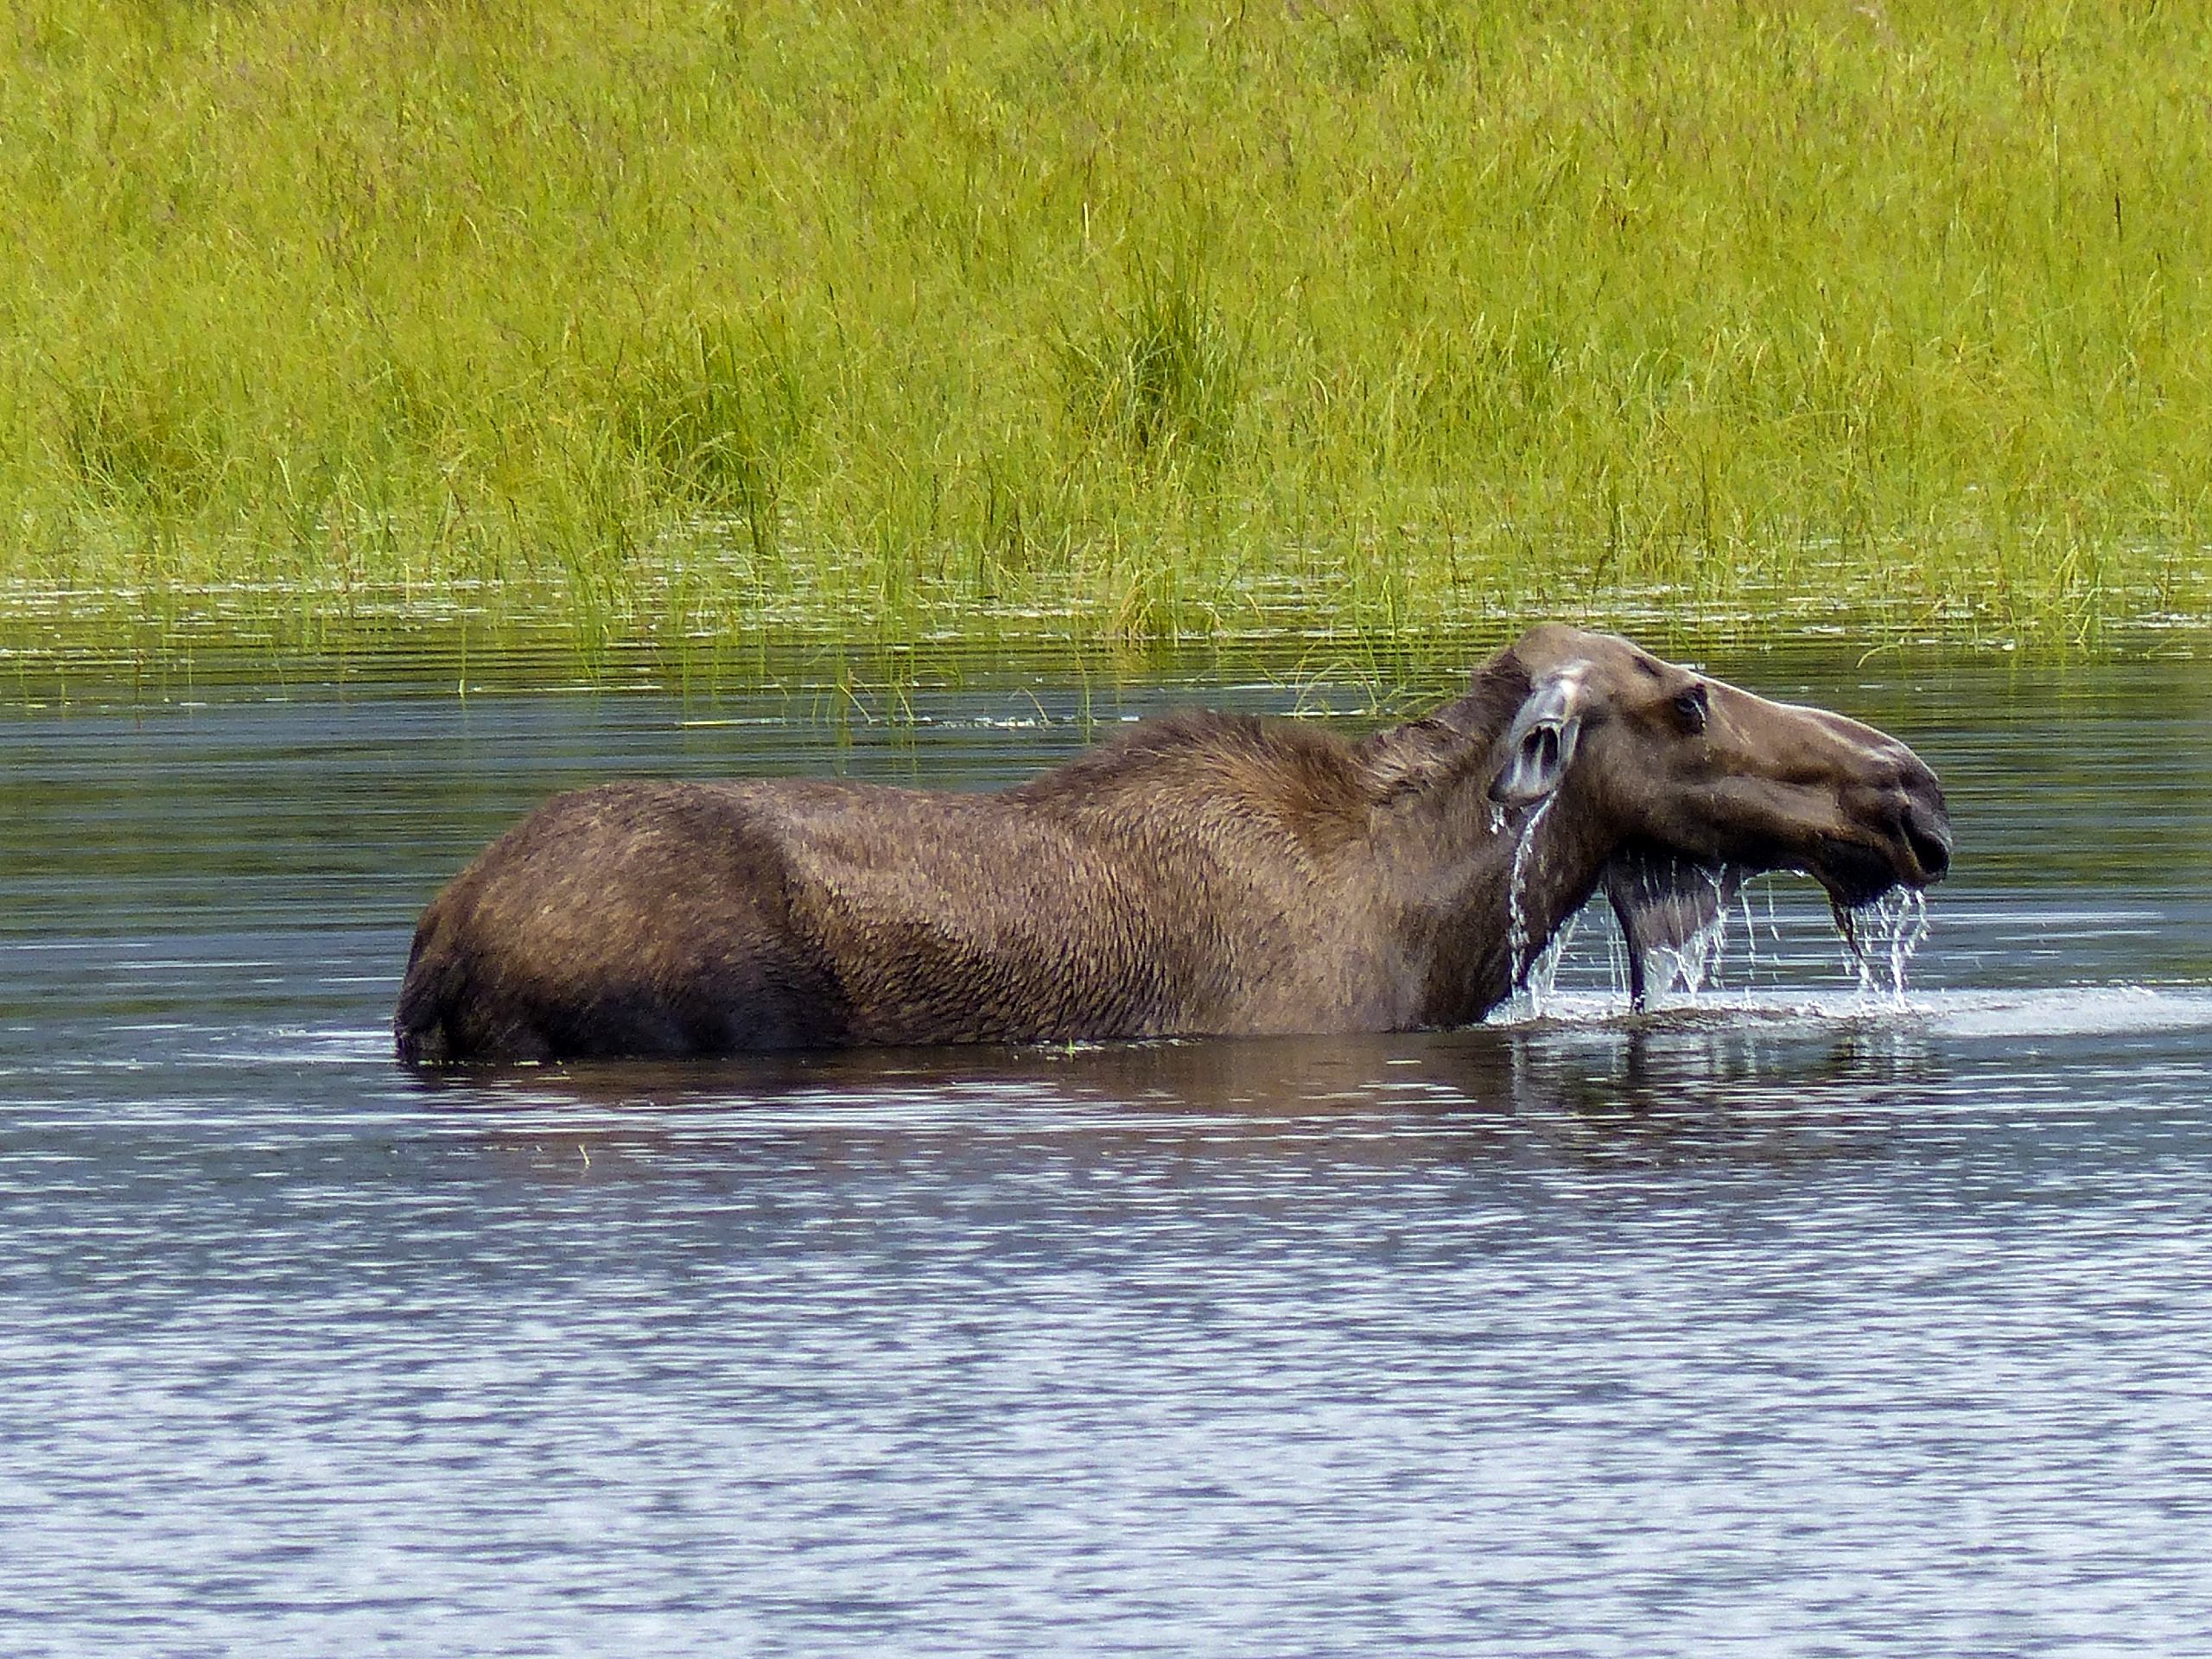 Moose in Denali National Park